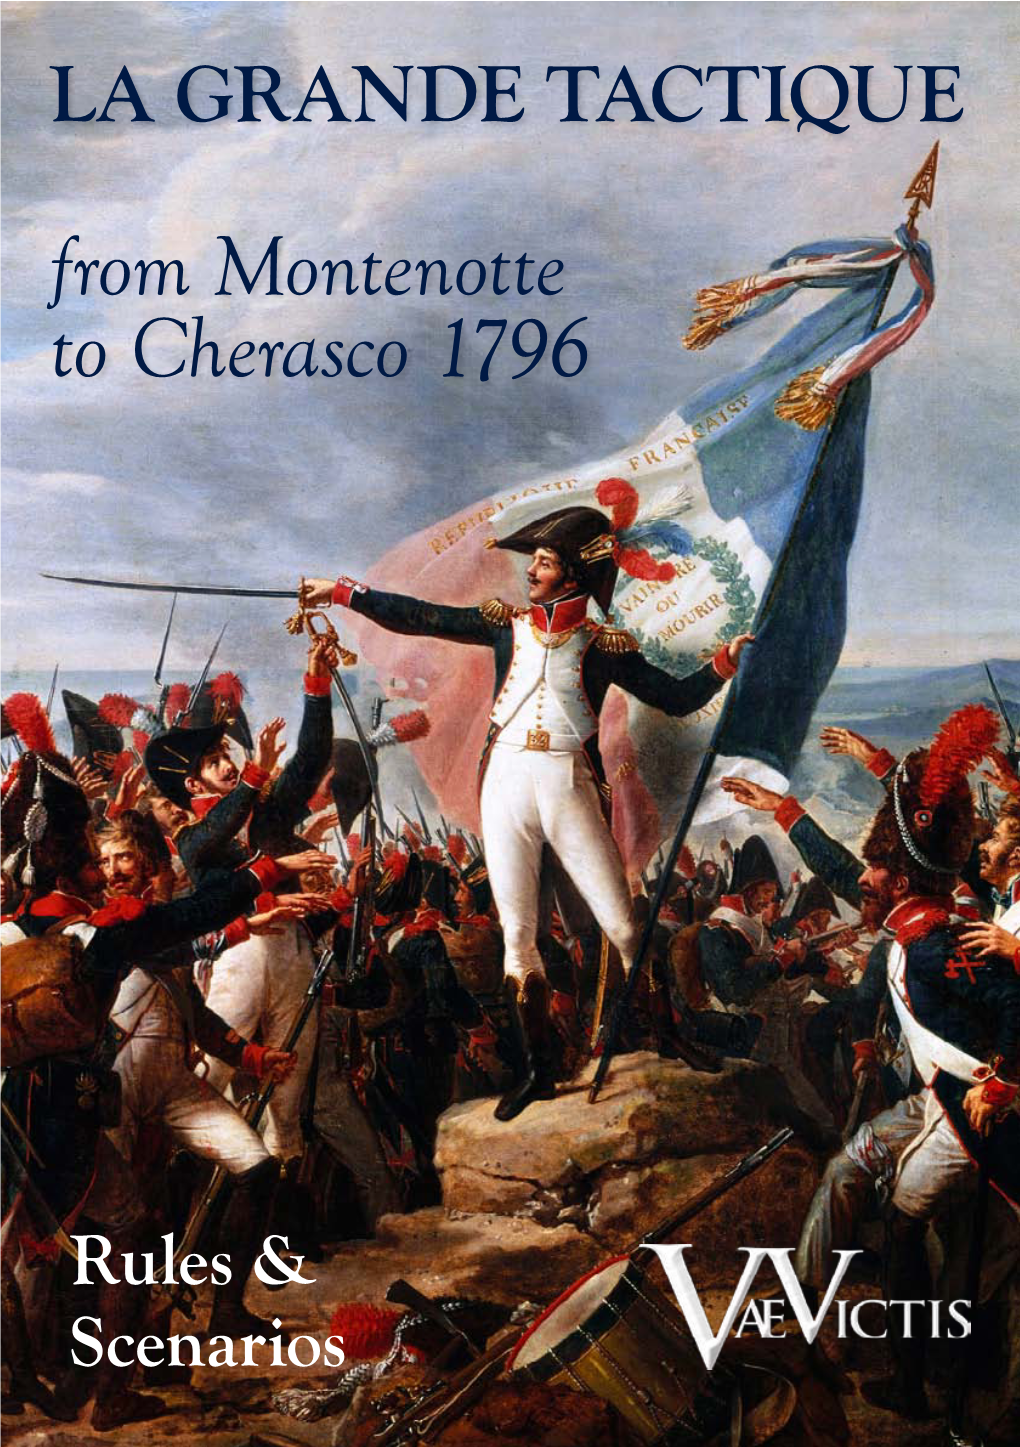 From Montenotte to Cherasco 1796